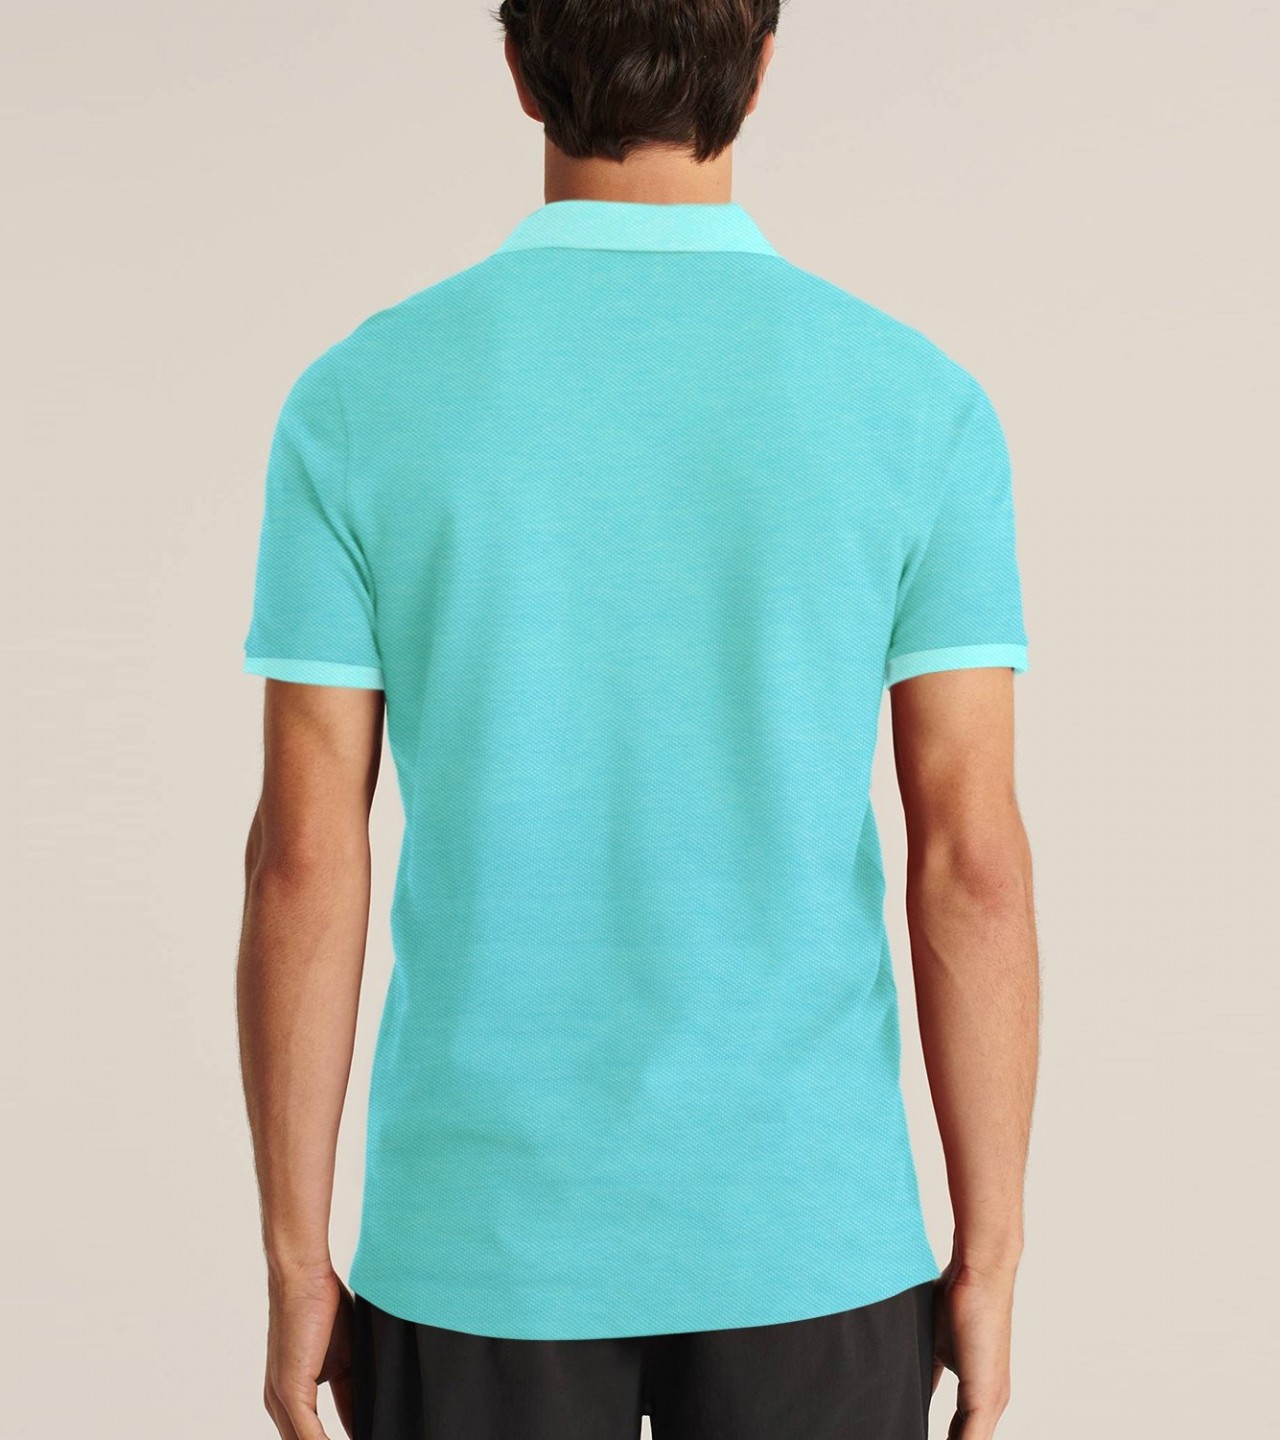 Stylish Summer Half Sleeve Polo Shirt For Men